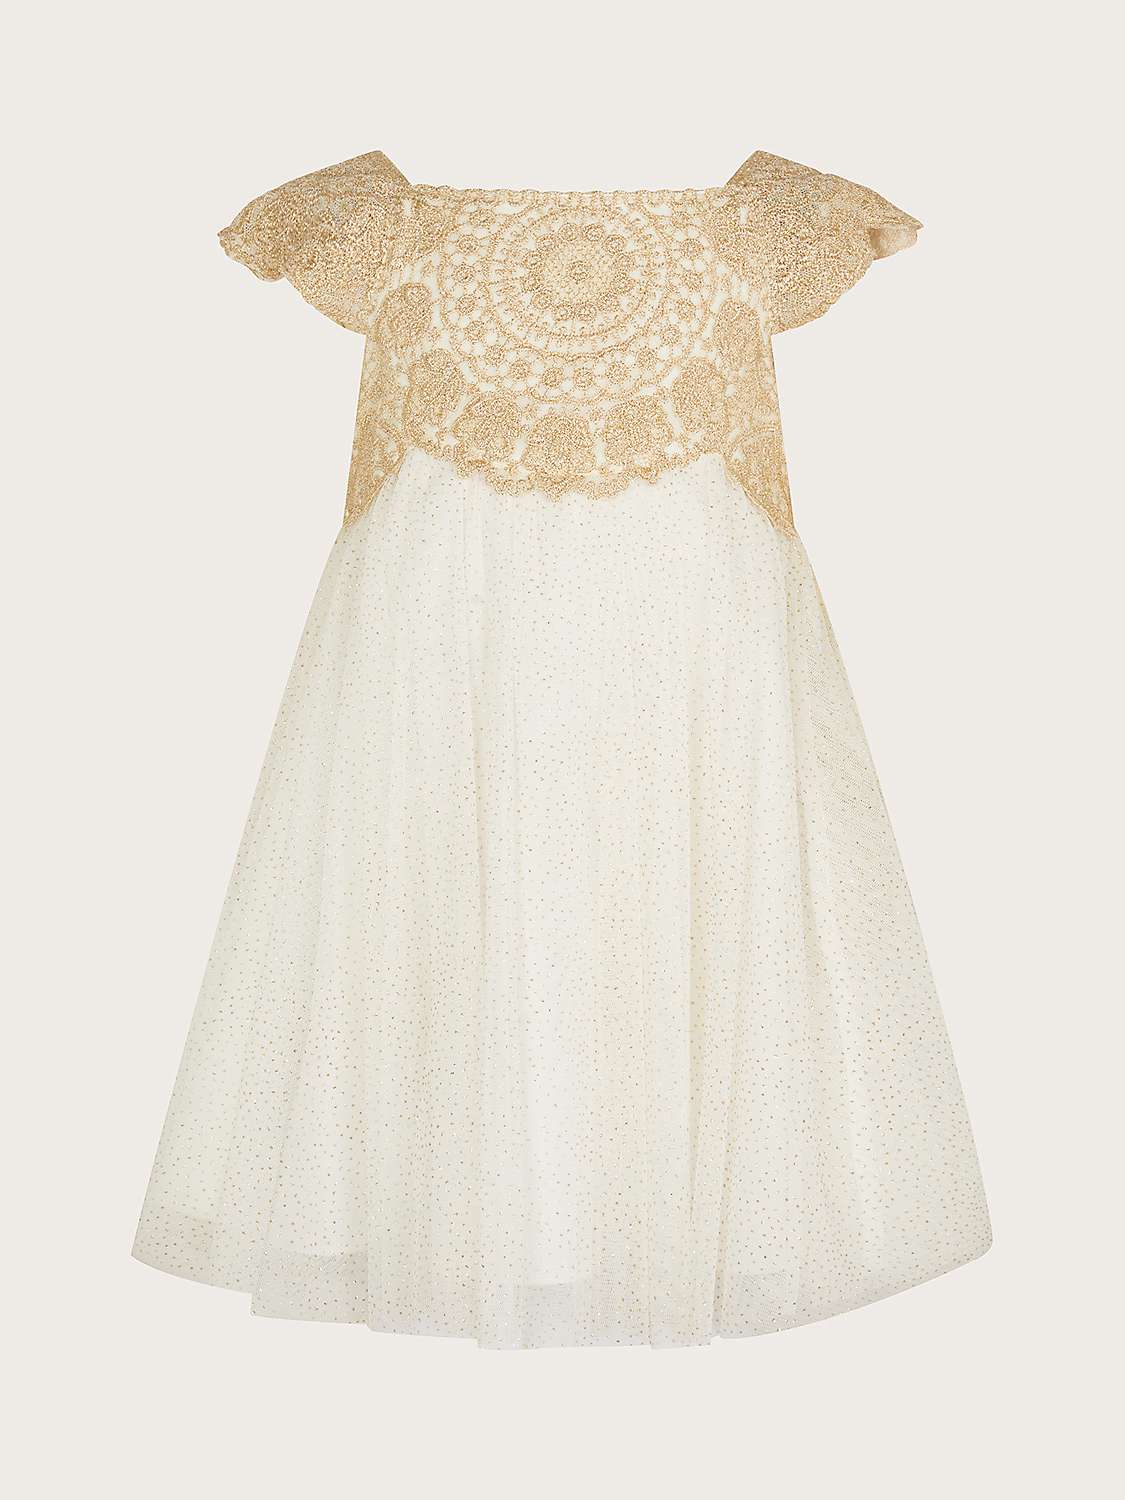 Buy Monsoon Baby Estella Floral Embroidered Dress Online at johnlewis.com